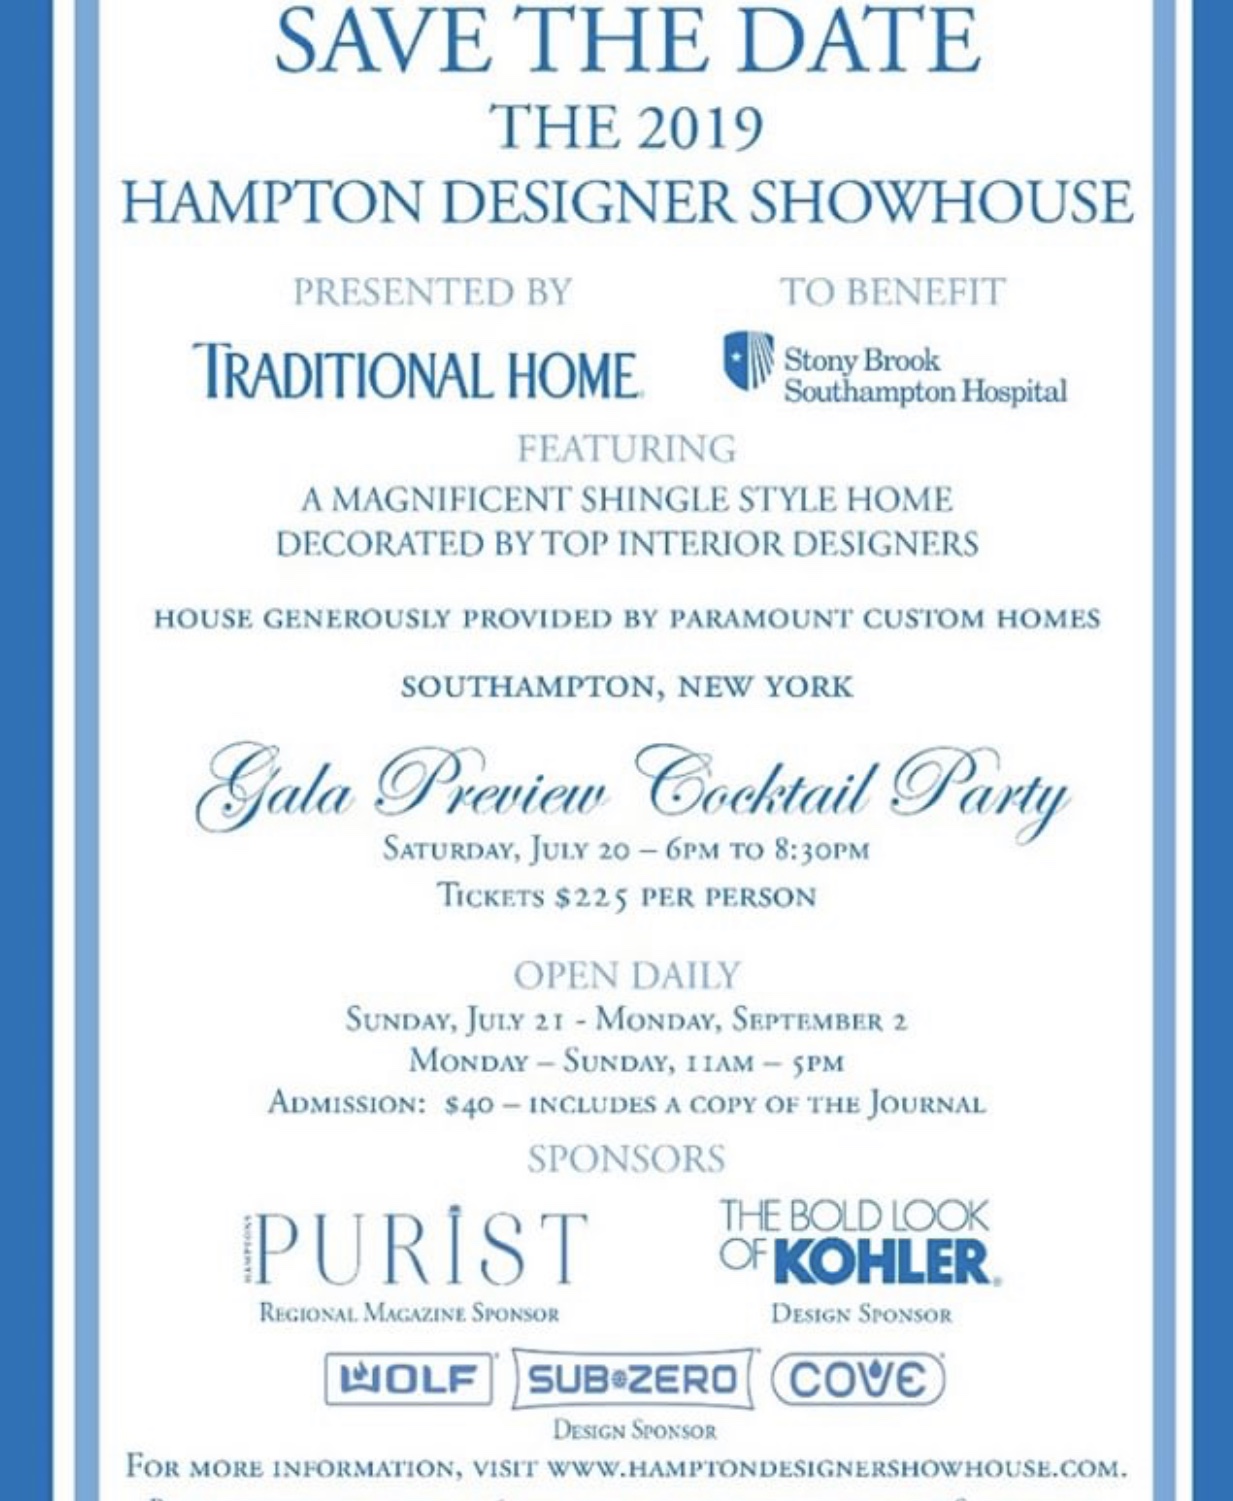 The 2019 Hampton Designer Showhouse